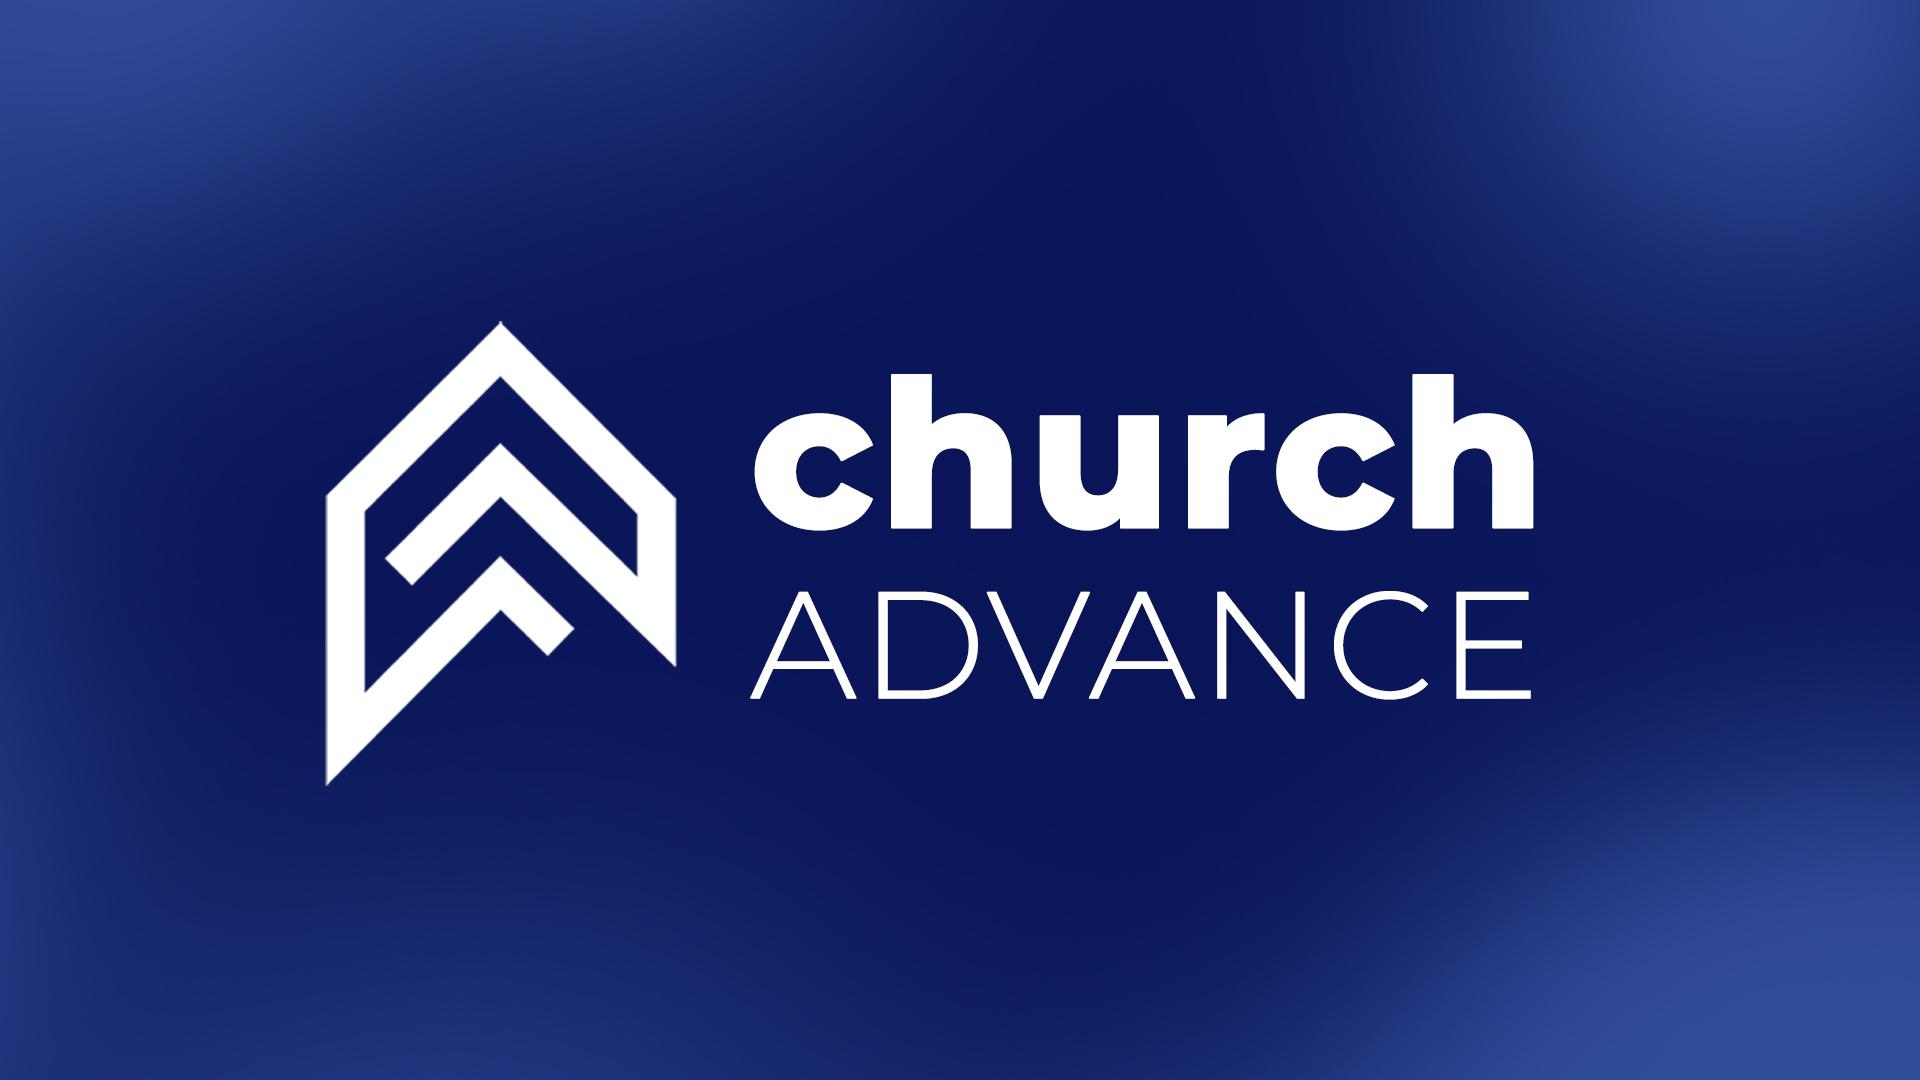 Church Advance